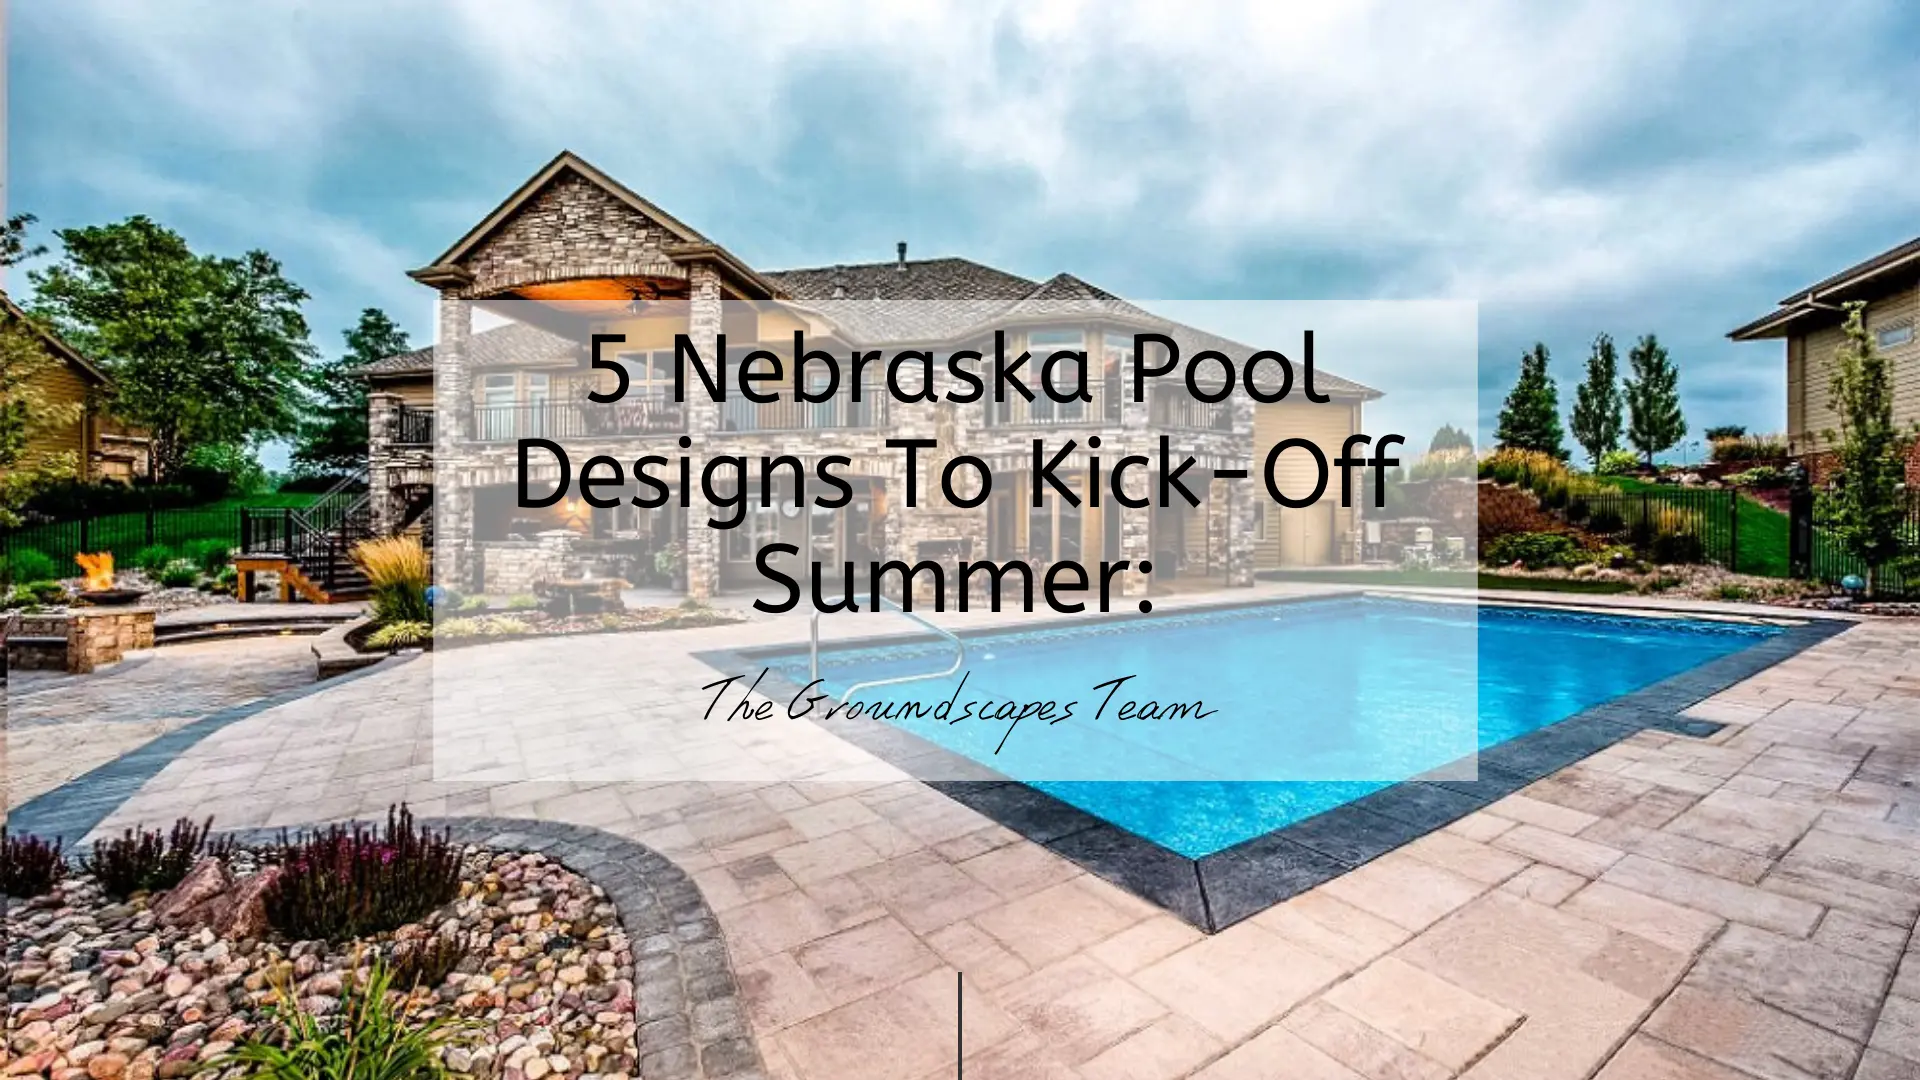 5 Nebraska Pool Designs To Kick-Off Summer: